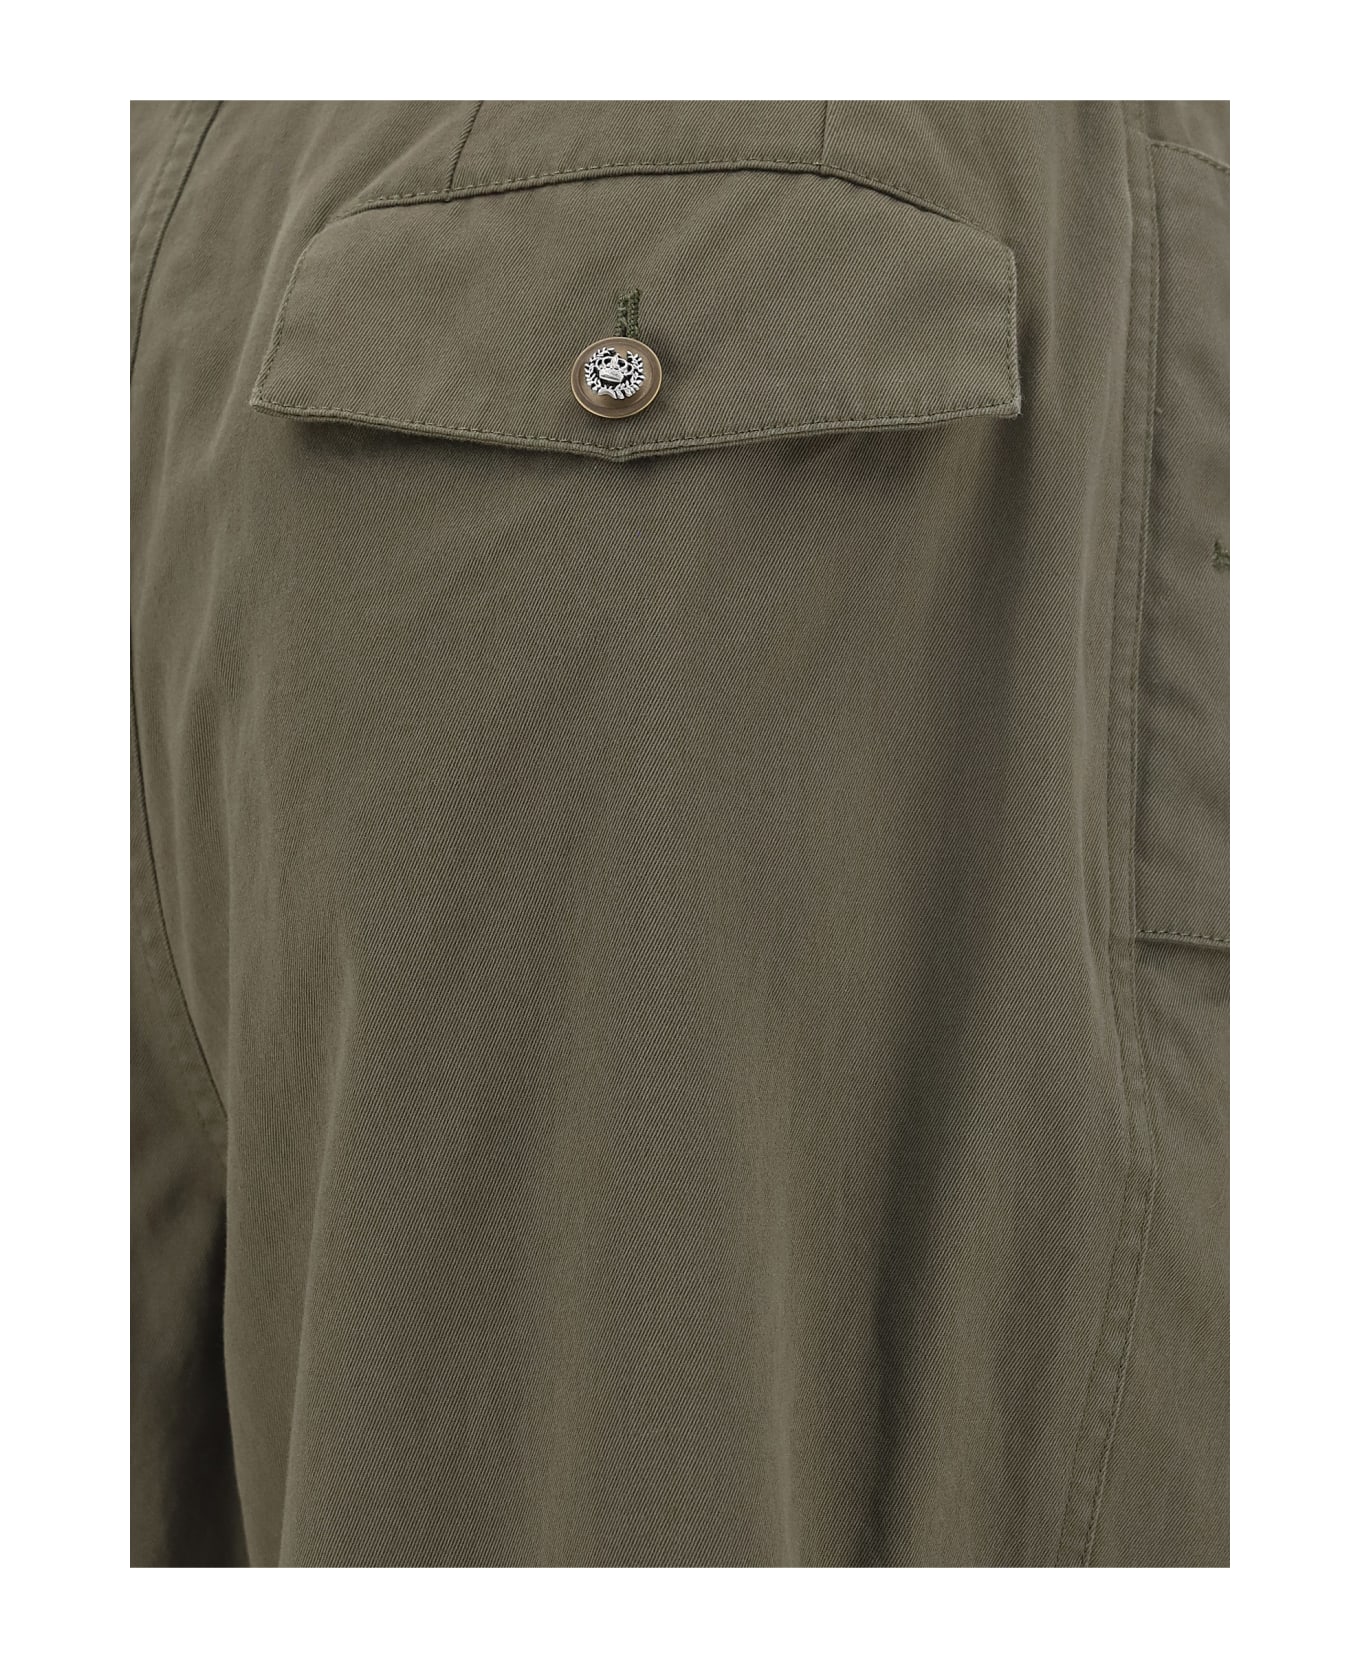 Dolce & Gabbana Military Pants - Multi